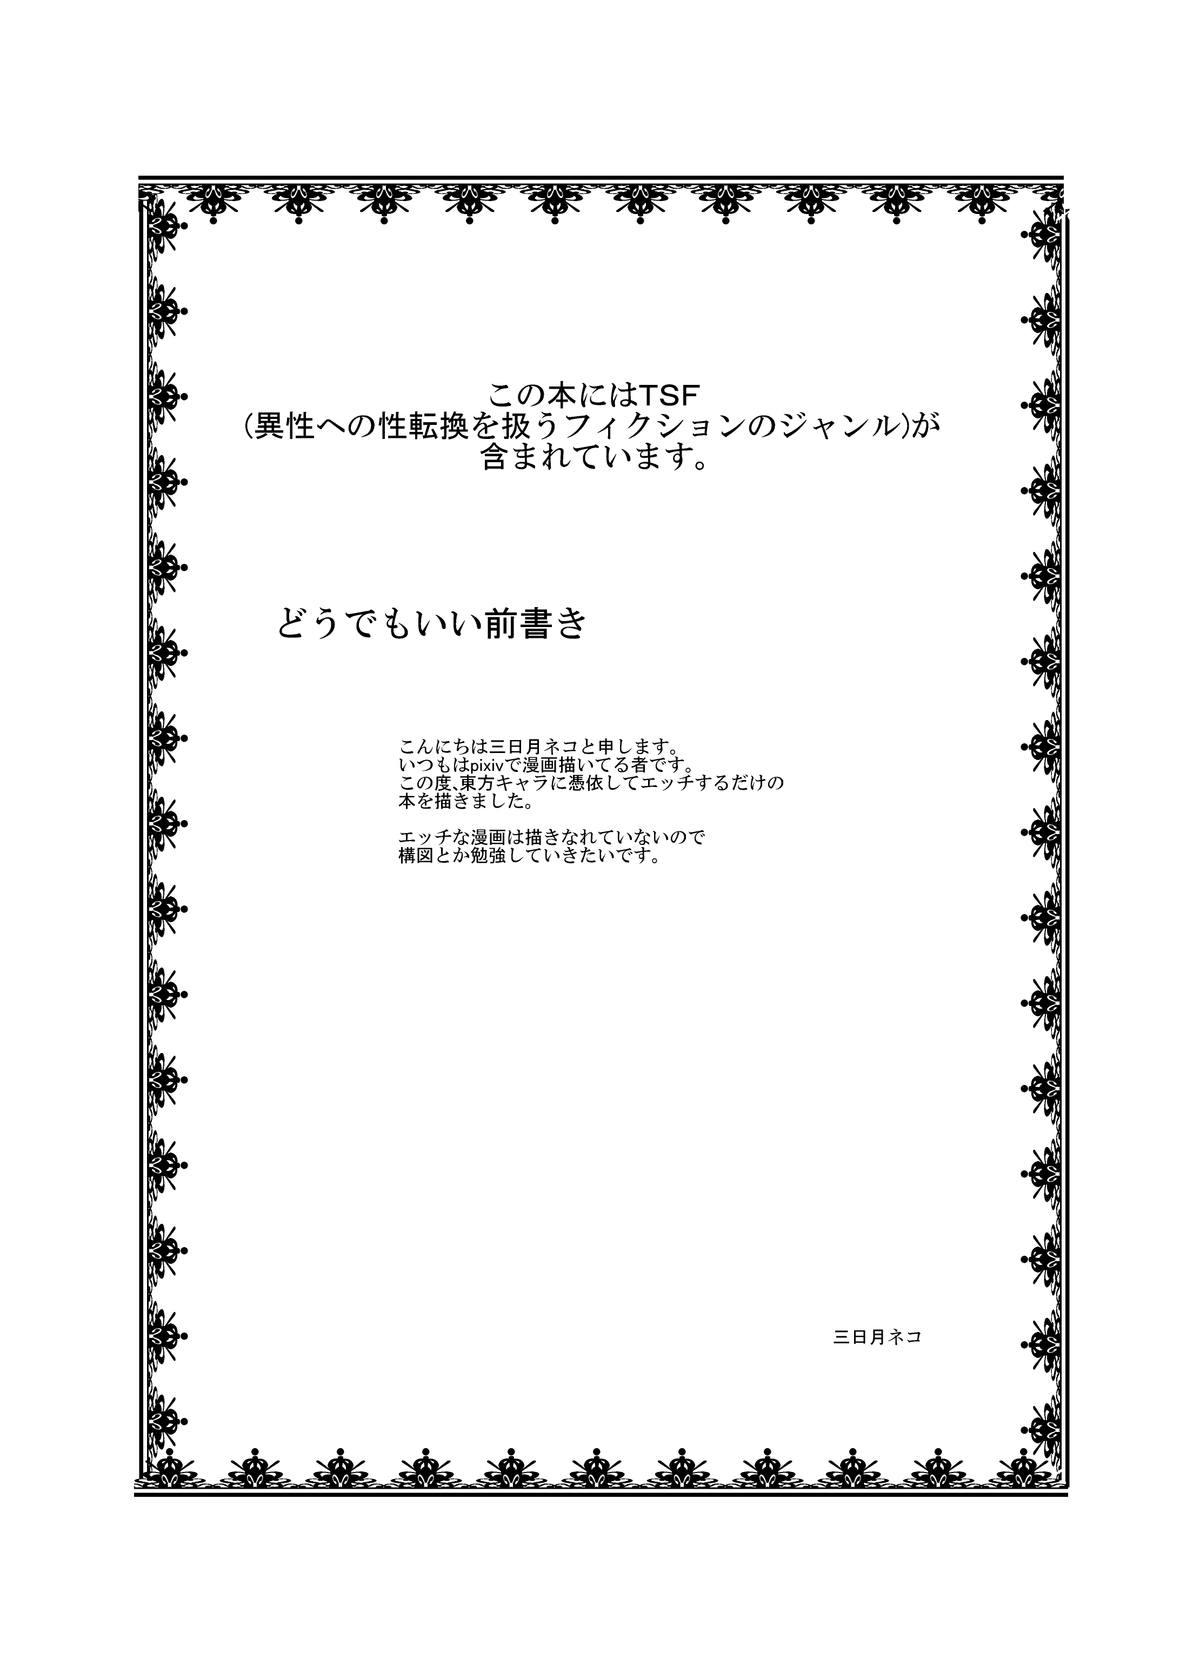 Tributo Touhou TS monogatari - Touhou project Gordita - Page 2